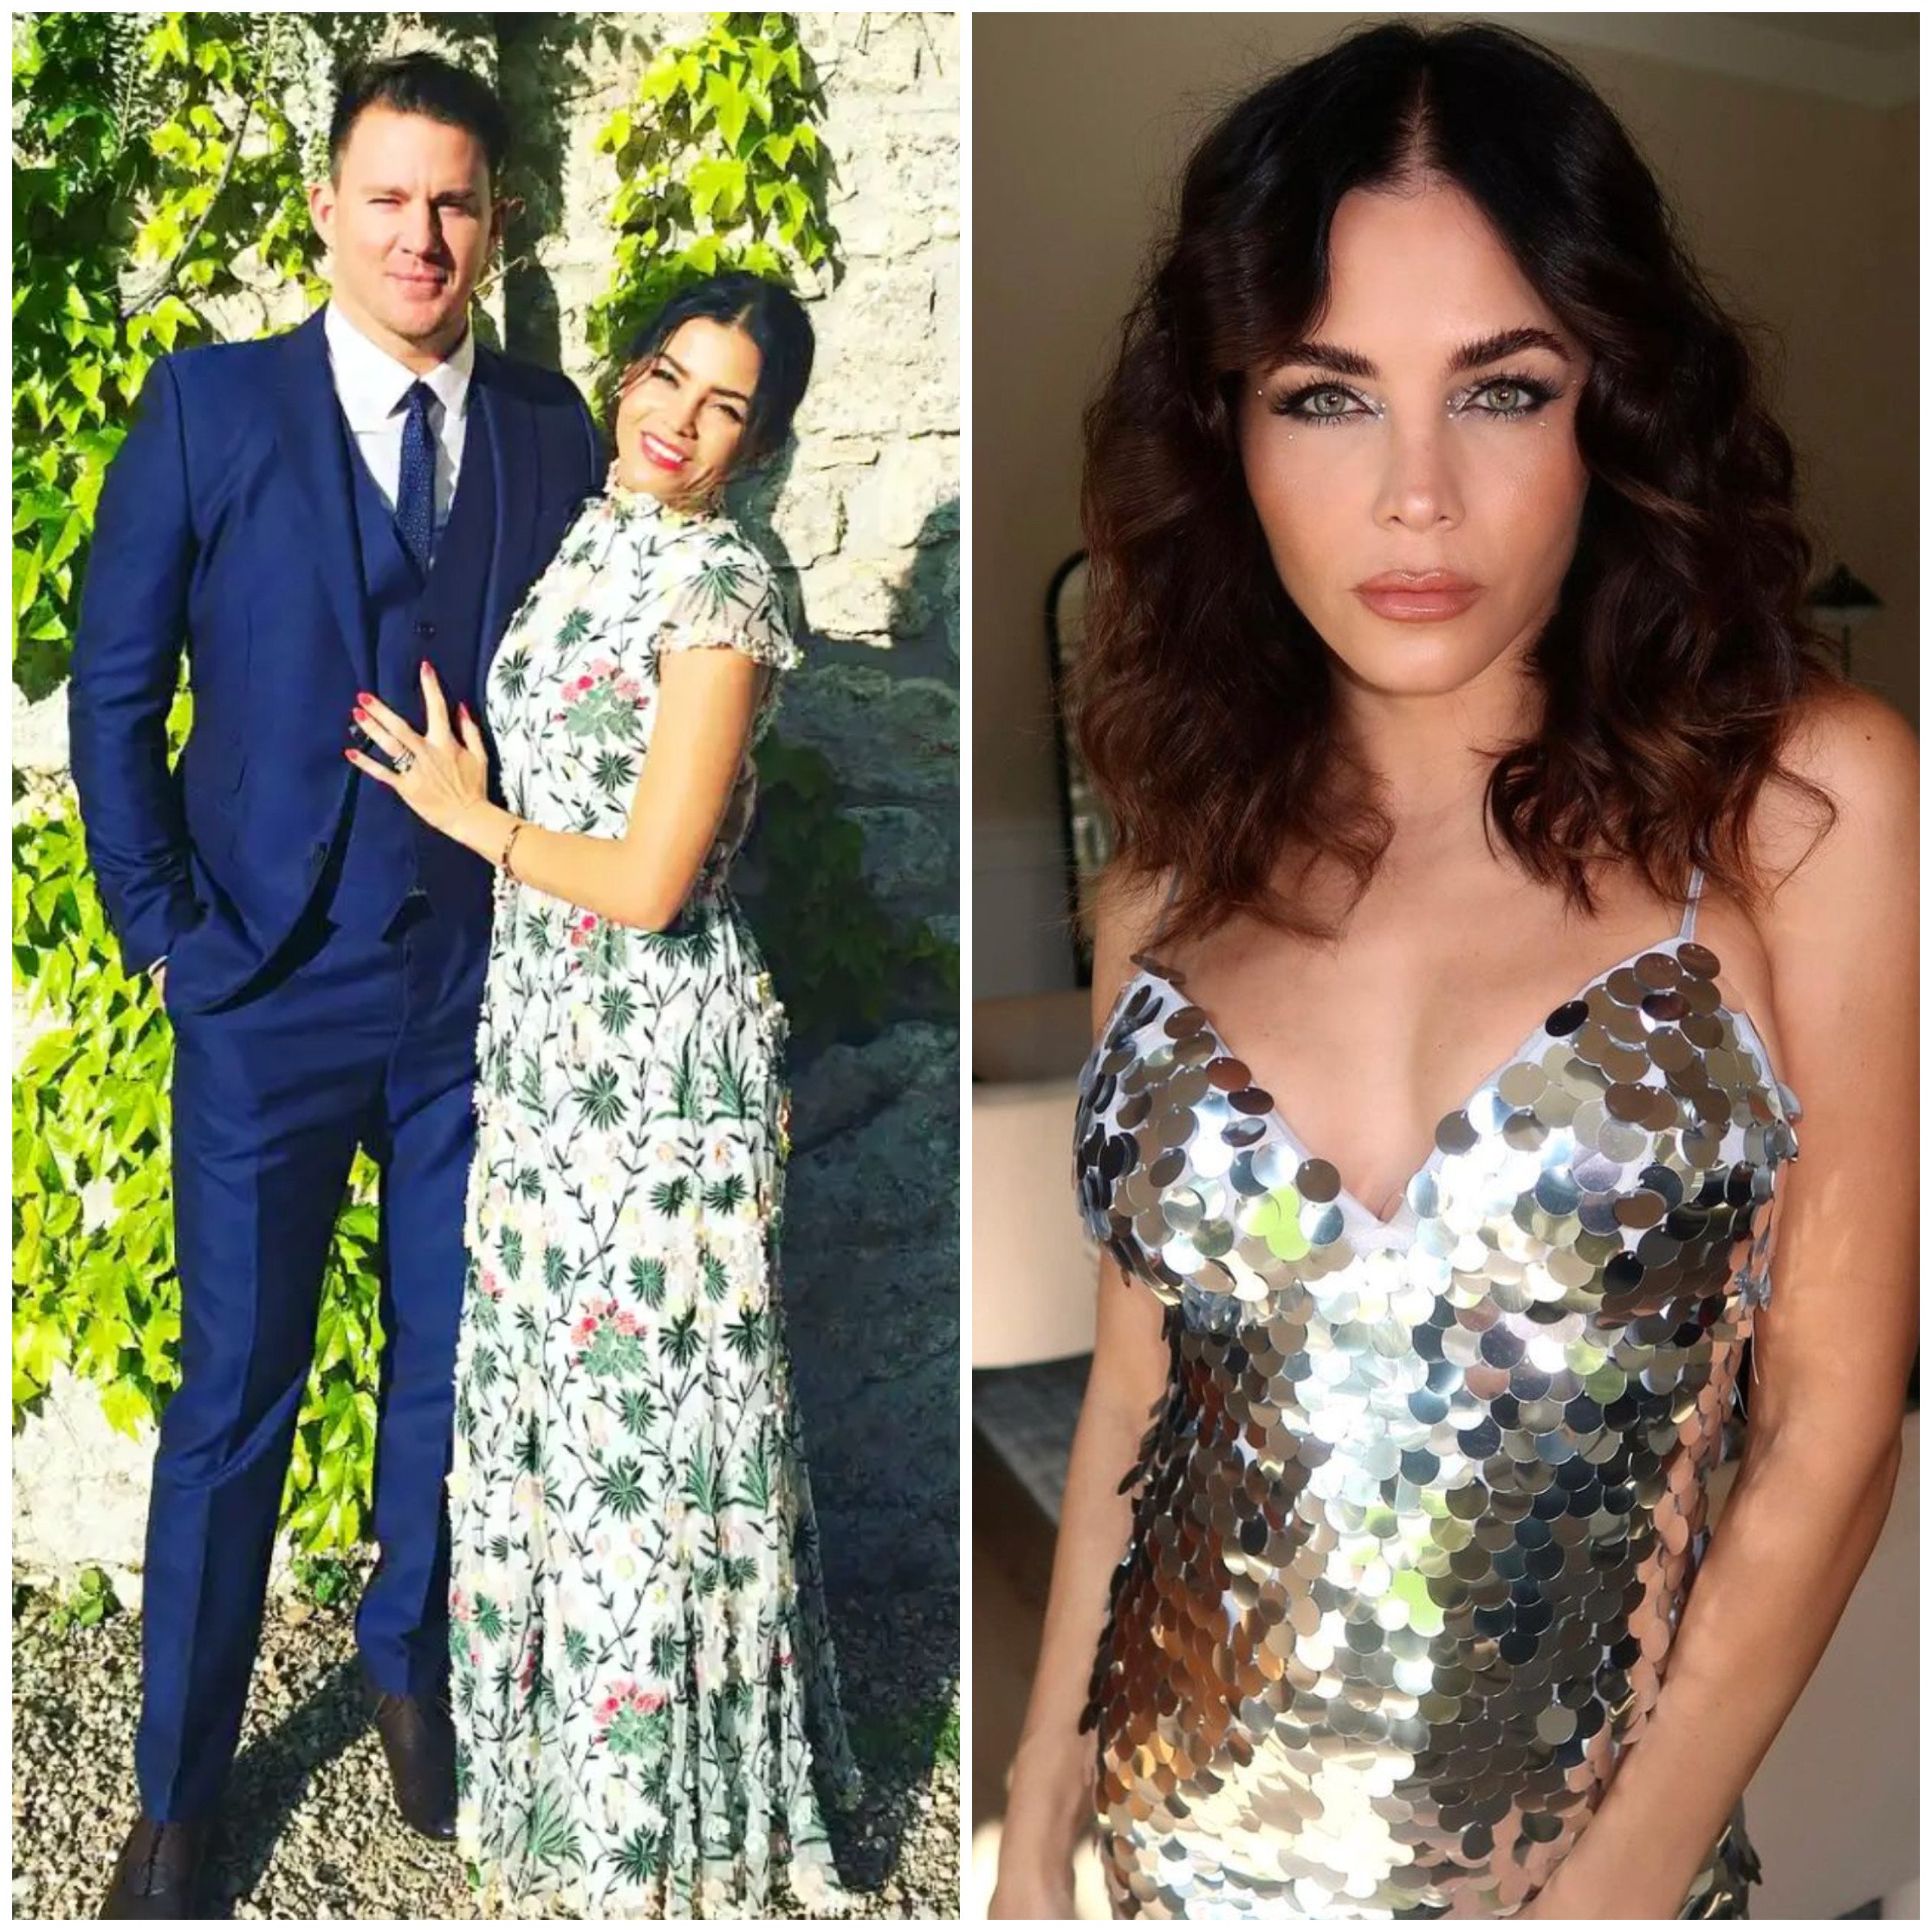 Channing Tatum and Jenna Dewan disagree over what she is owed in their divorce proceedings. Photos: @jennadewan/Instagram